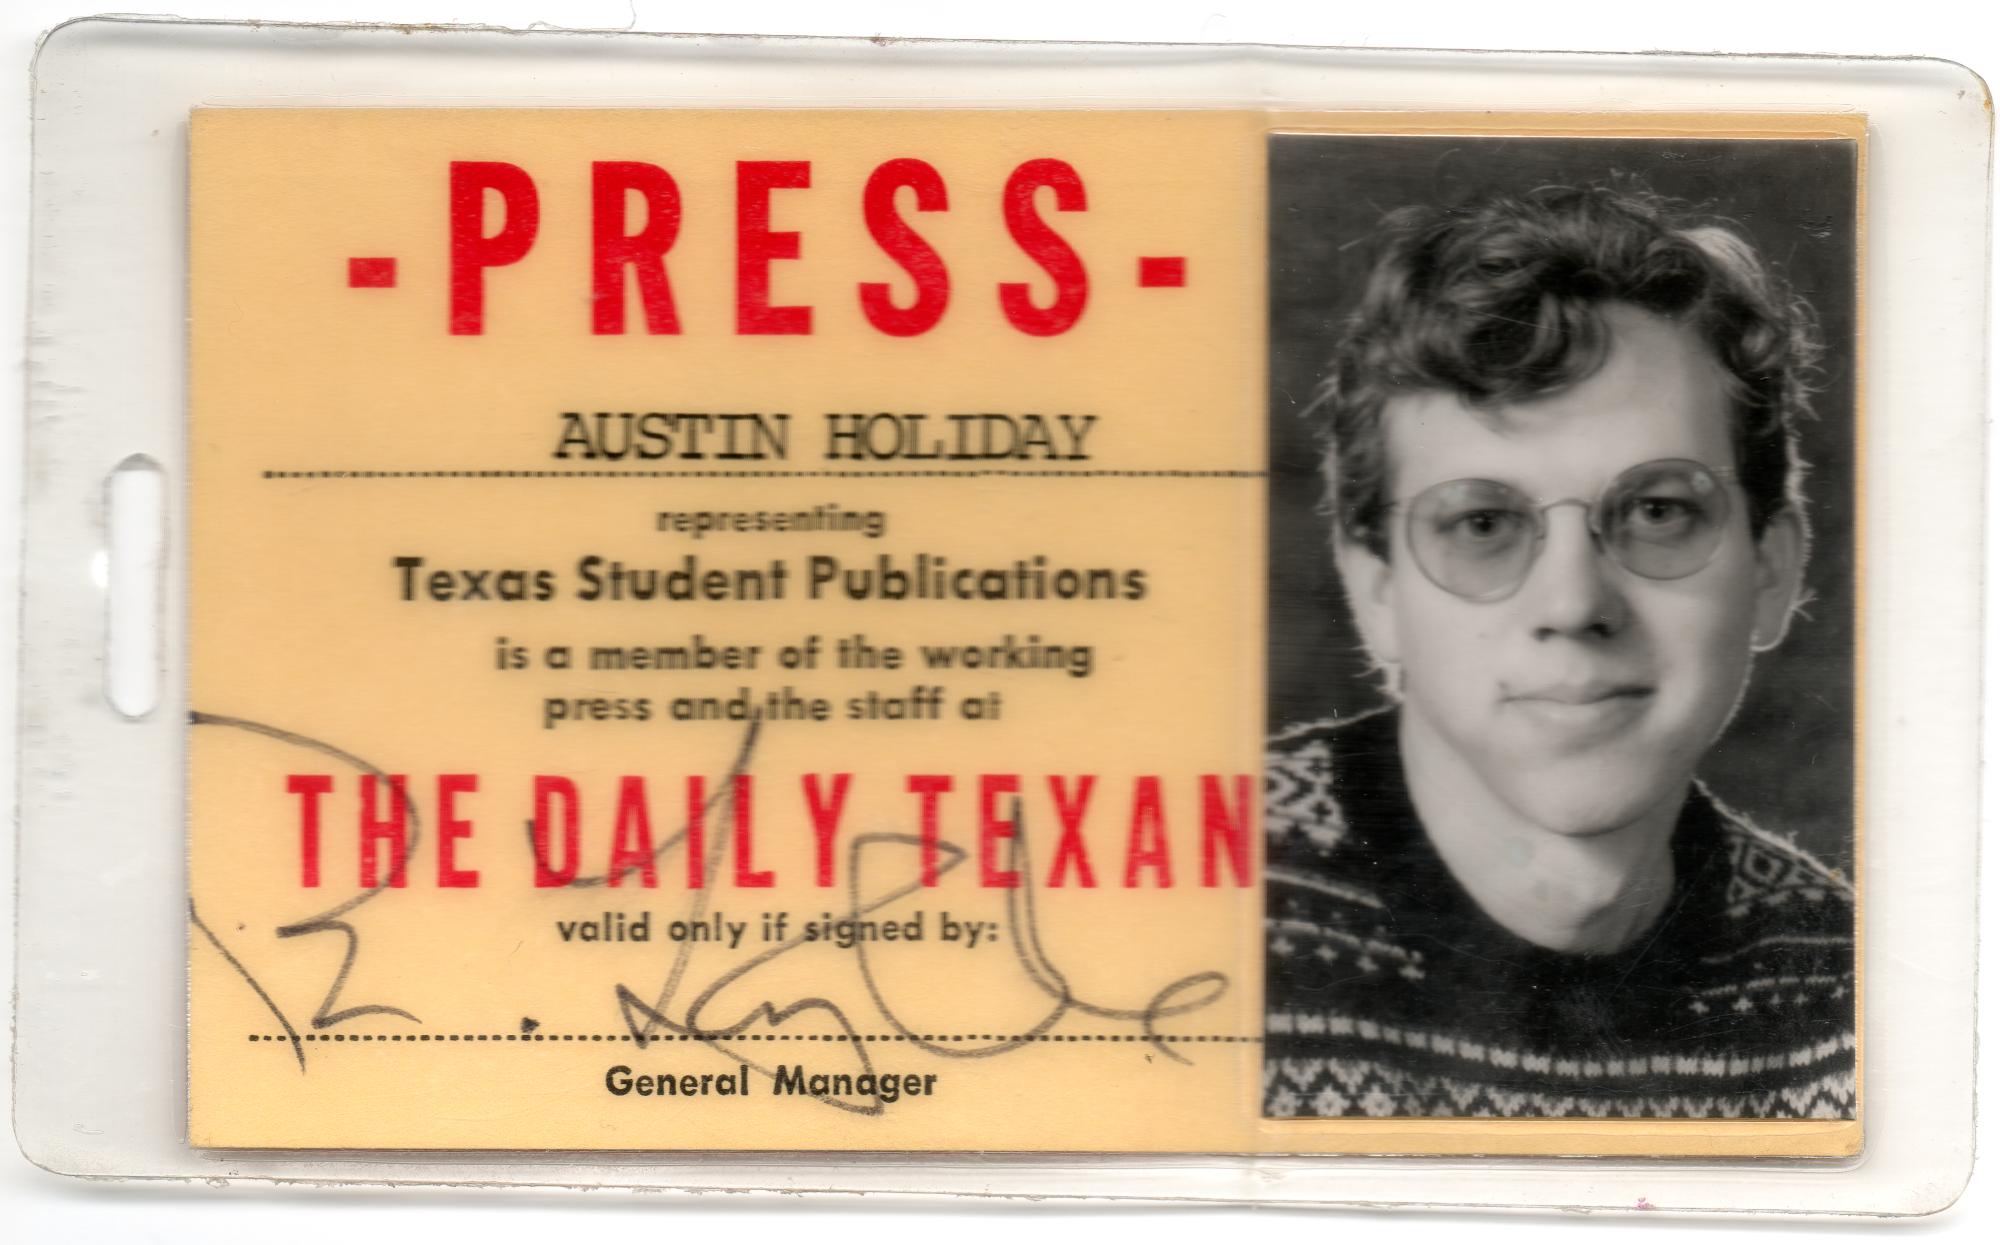 Daily Texan (1990 #1) - Press Card